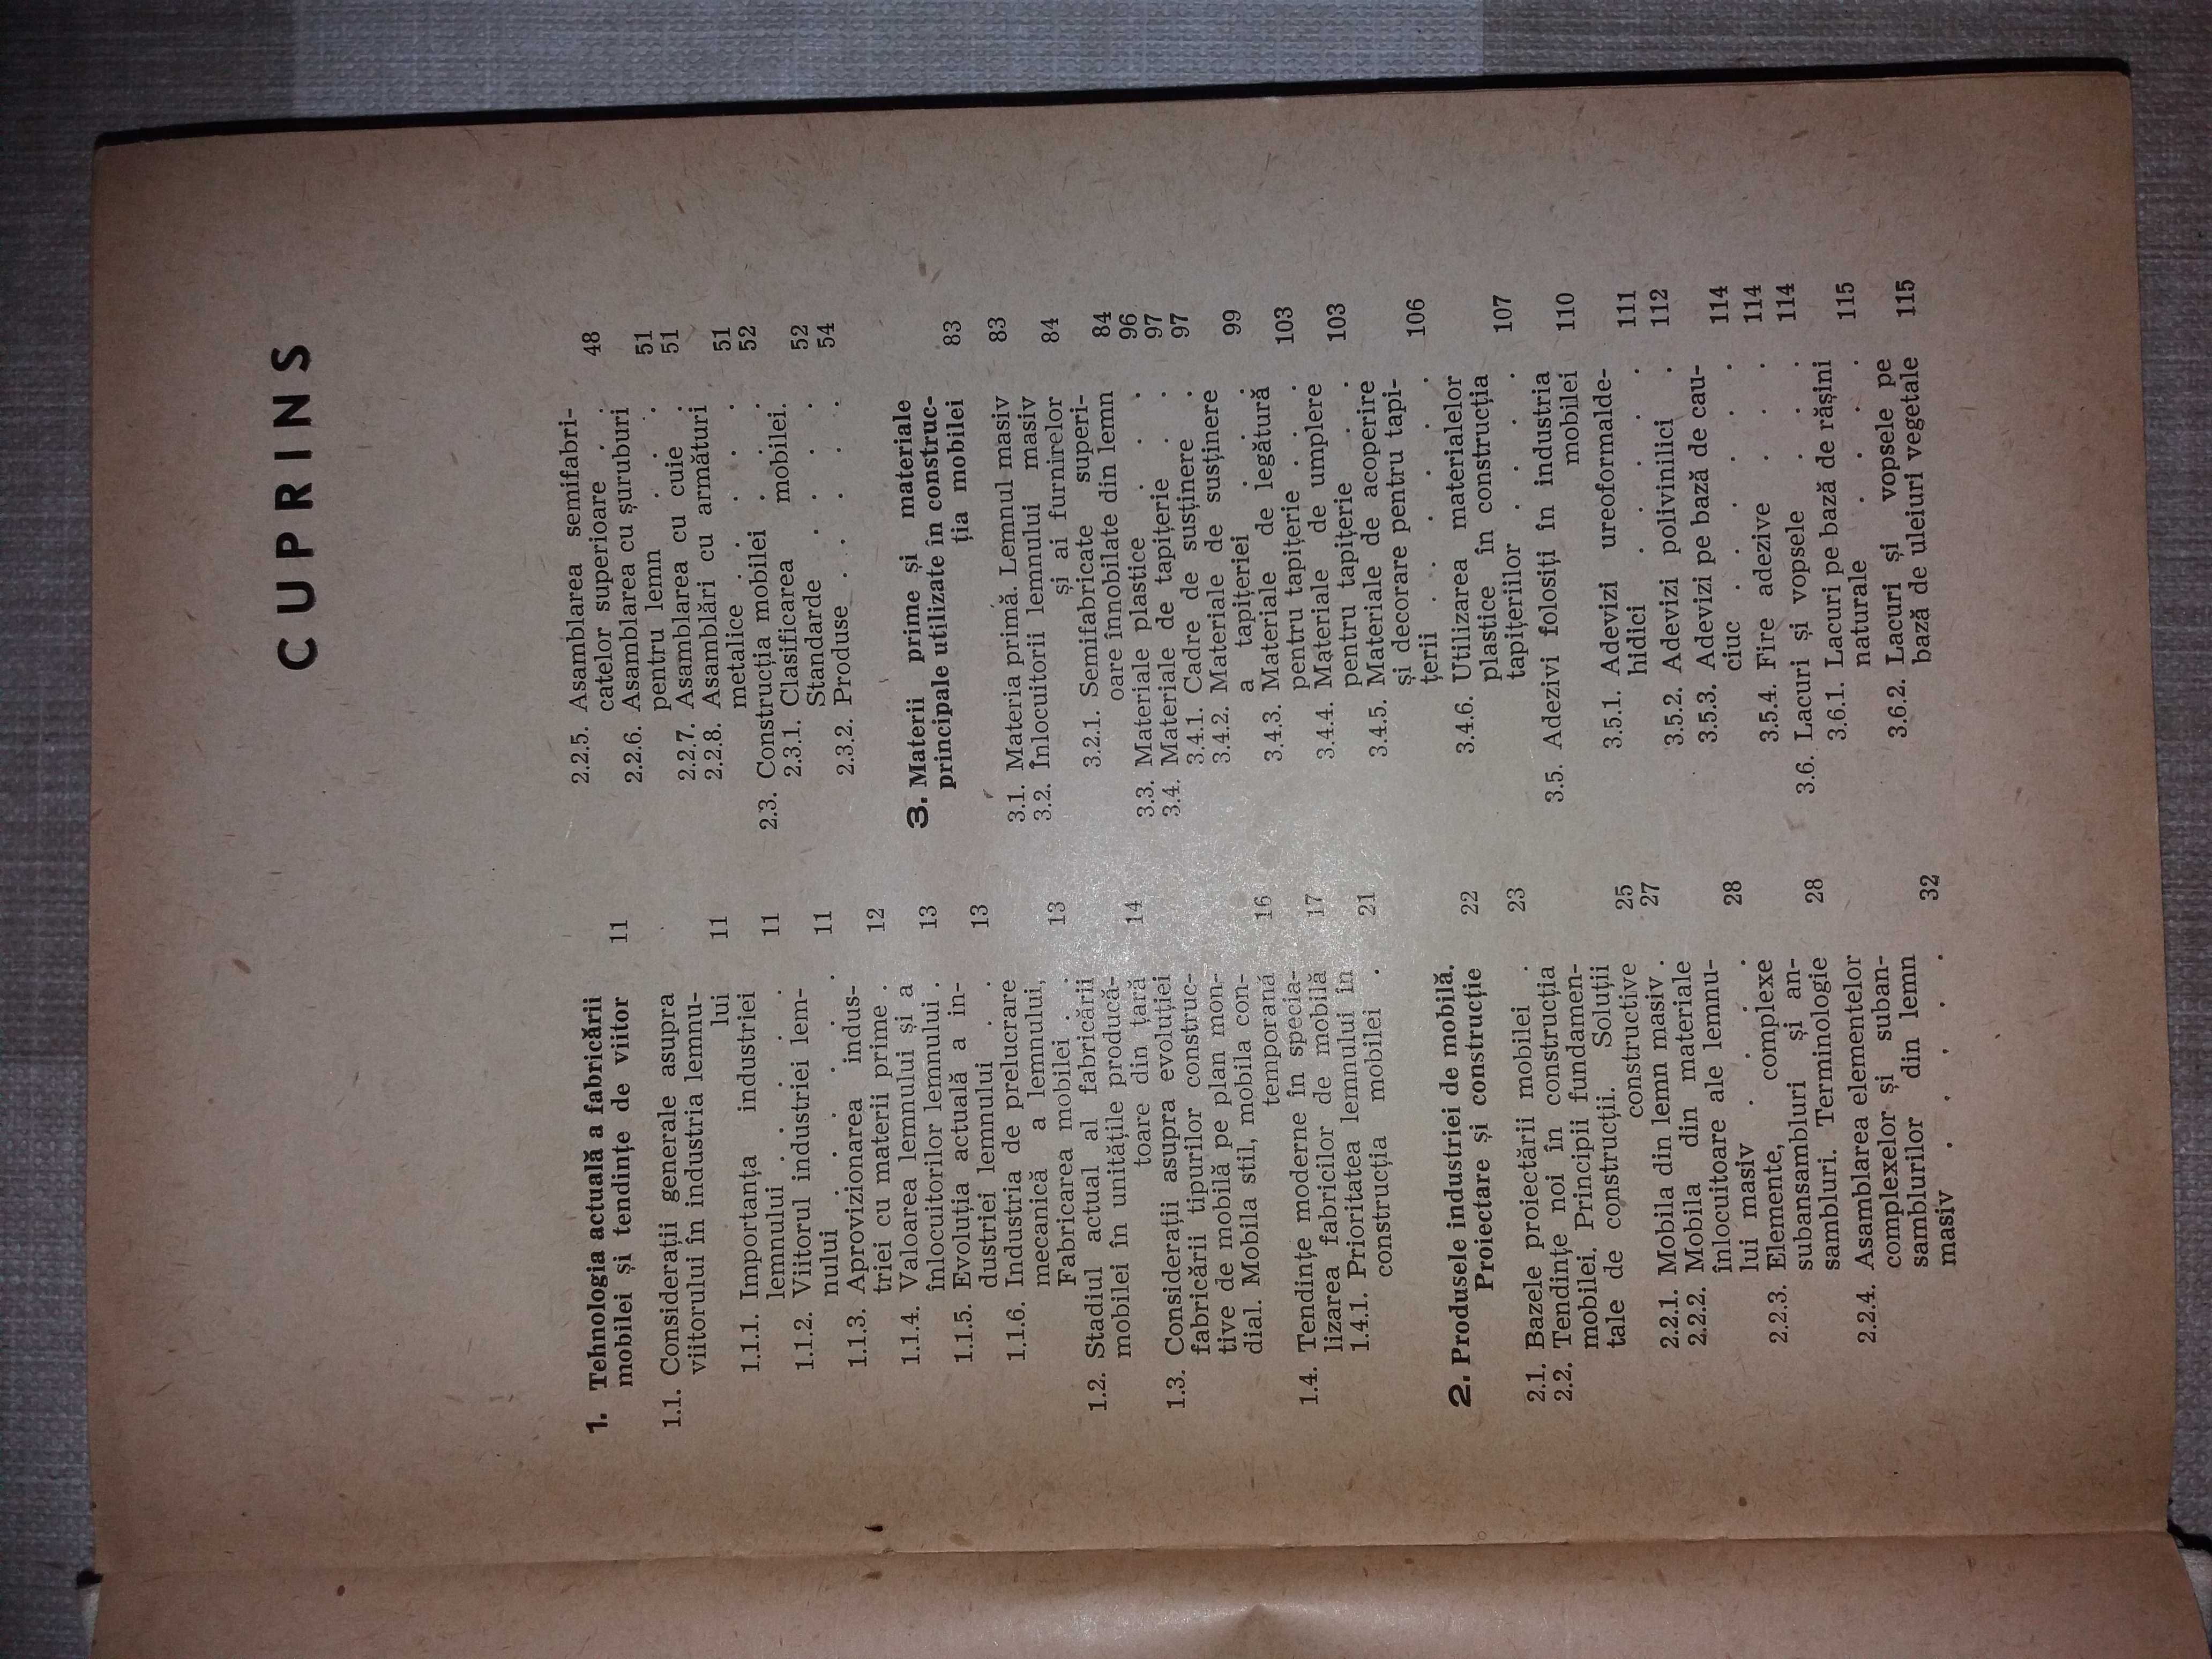 Tehnologii moderne in fabricarea mobilei ,1982  ed ll-a  504 pg.Cc1